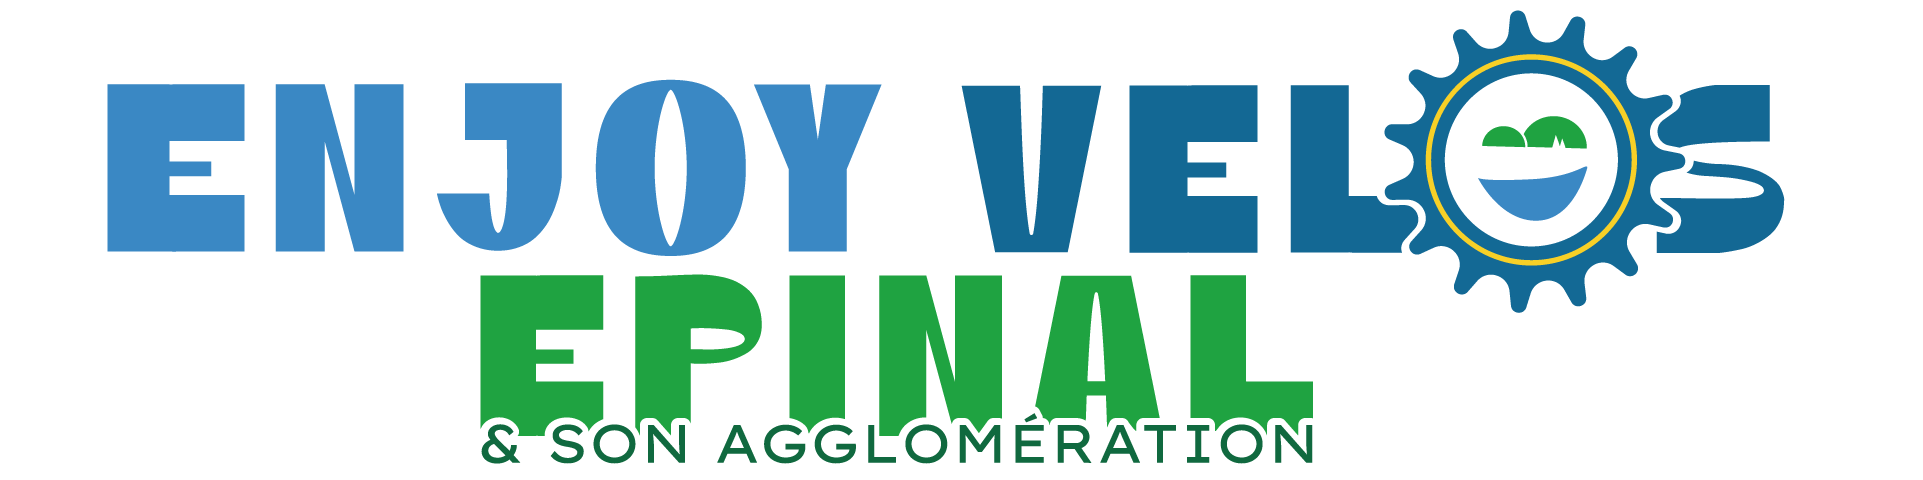 Logo EnjoyVelos Epinal - format Long - en couleurs